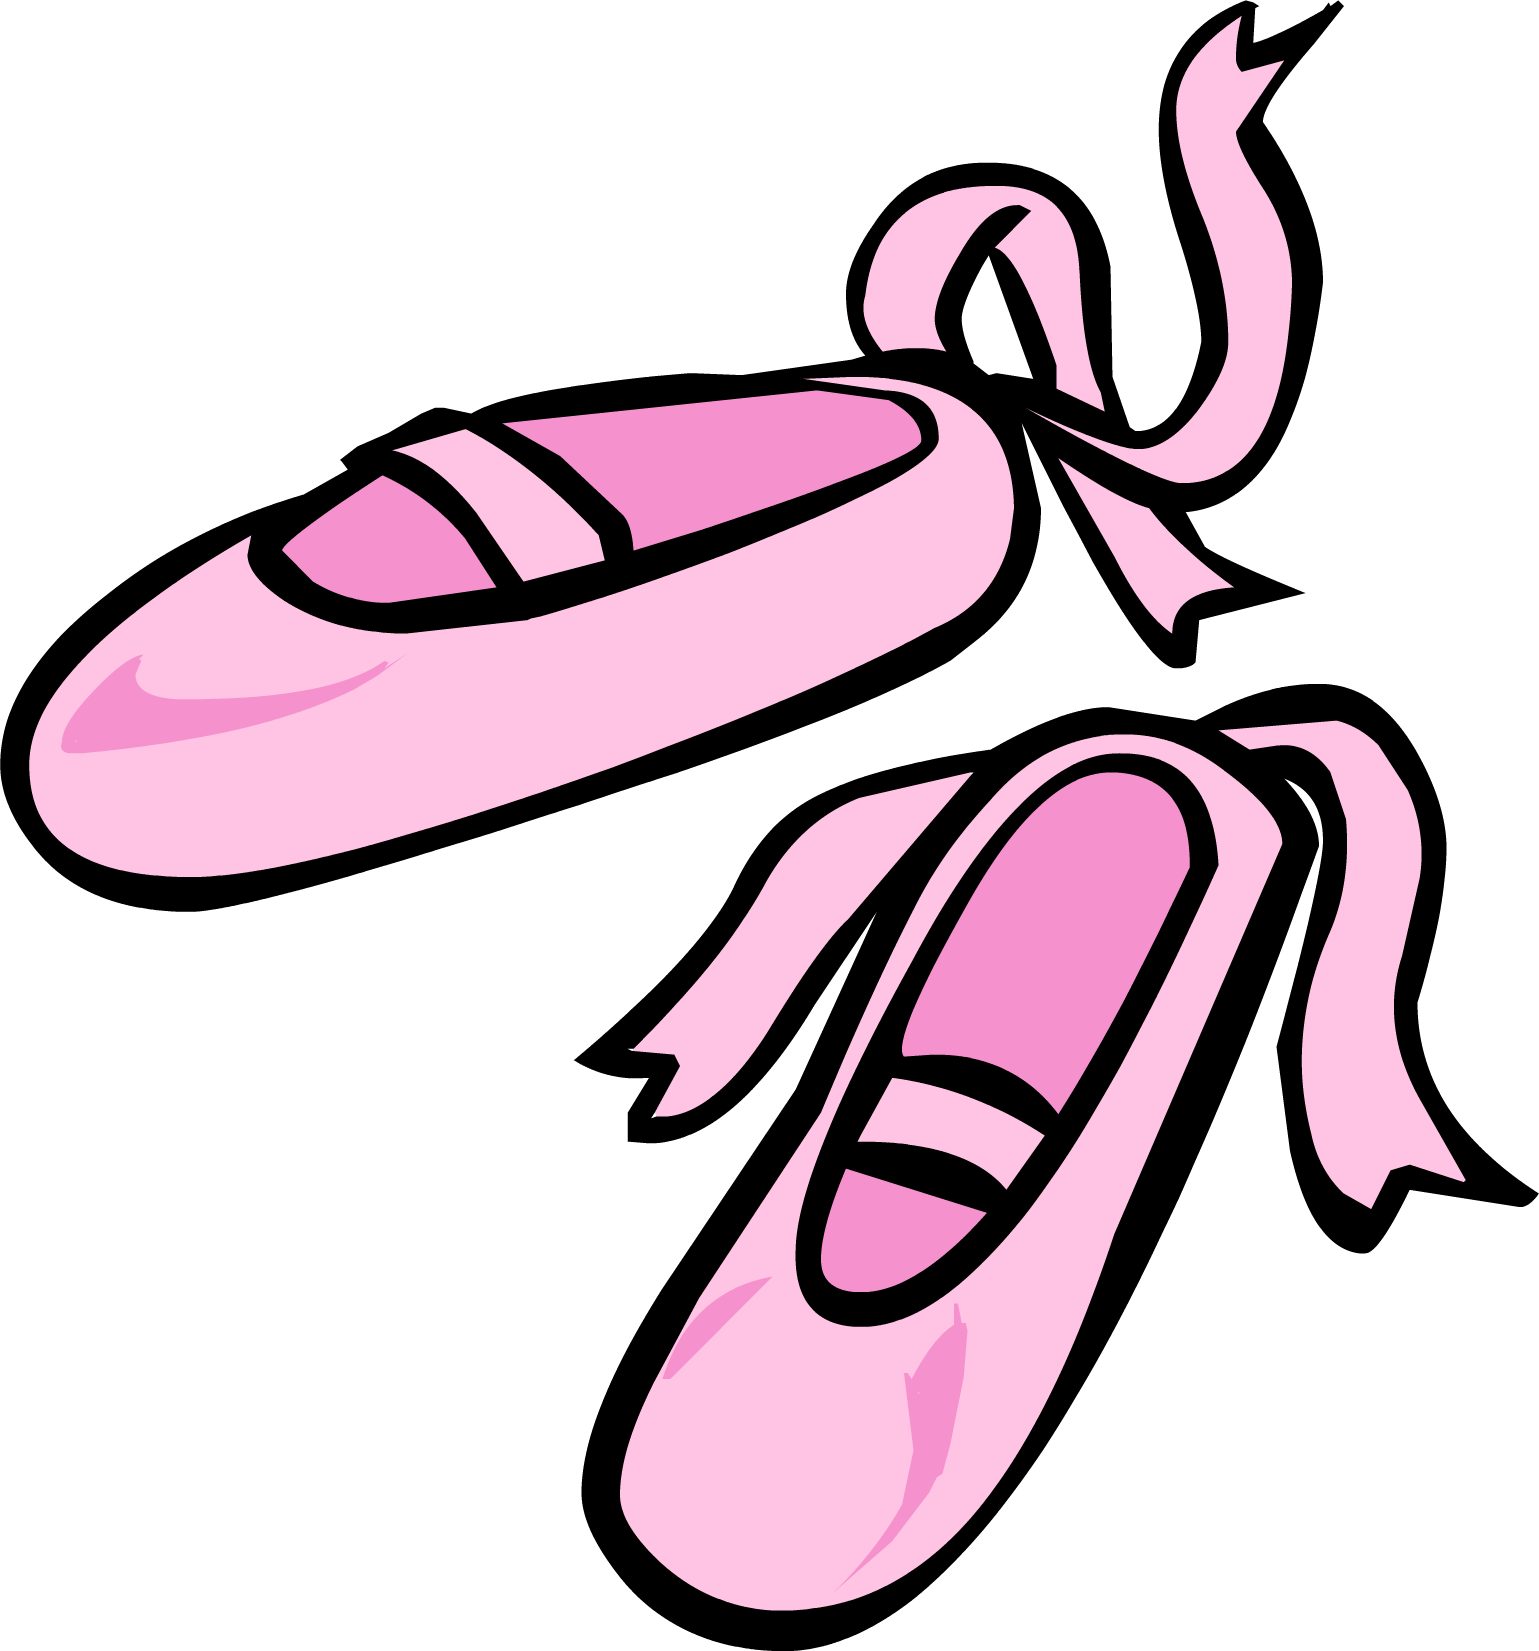 Ballet Shoes | Club Penguin Wiki | Fandom powered by Wikia